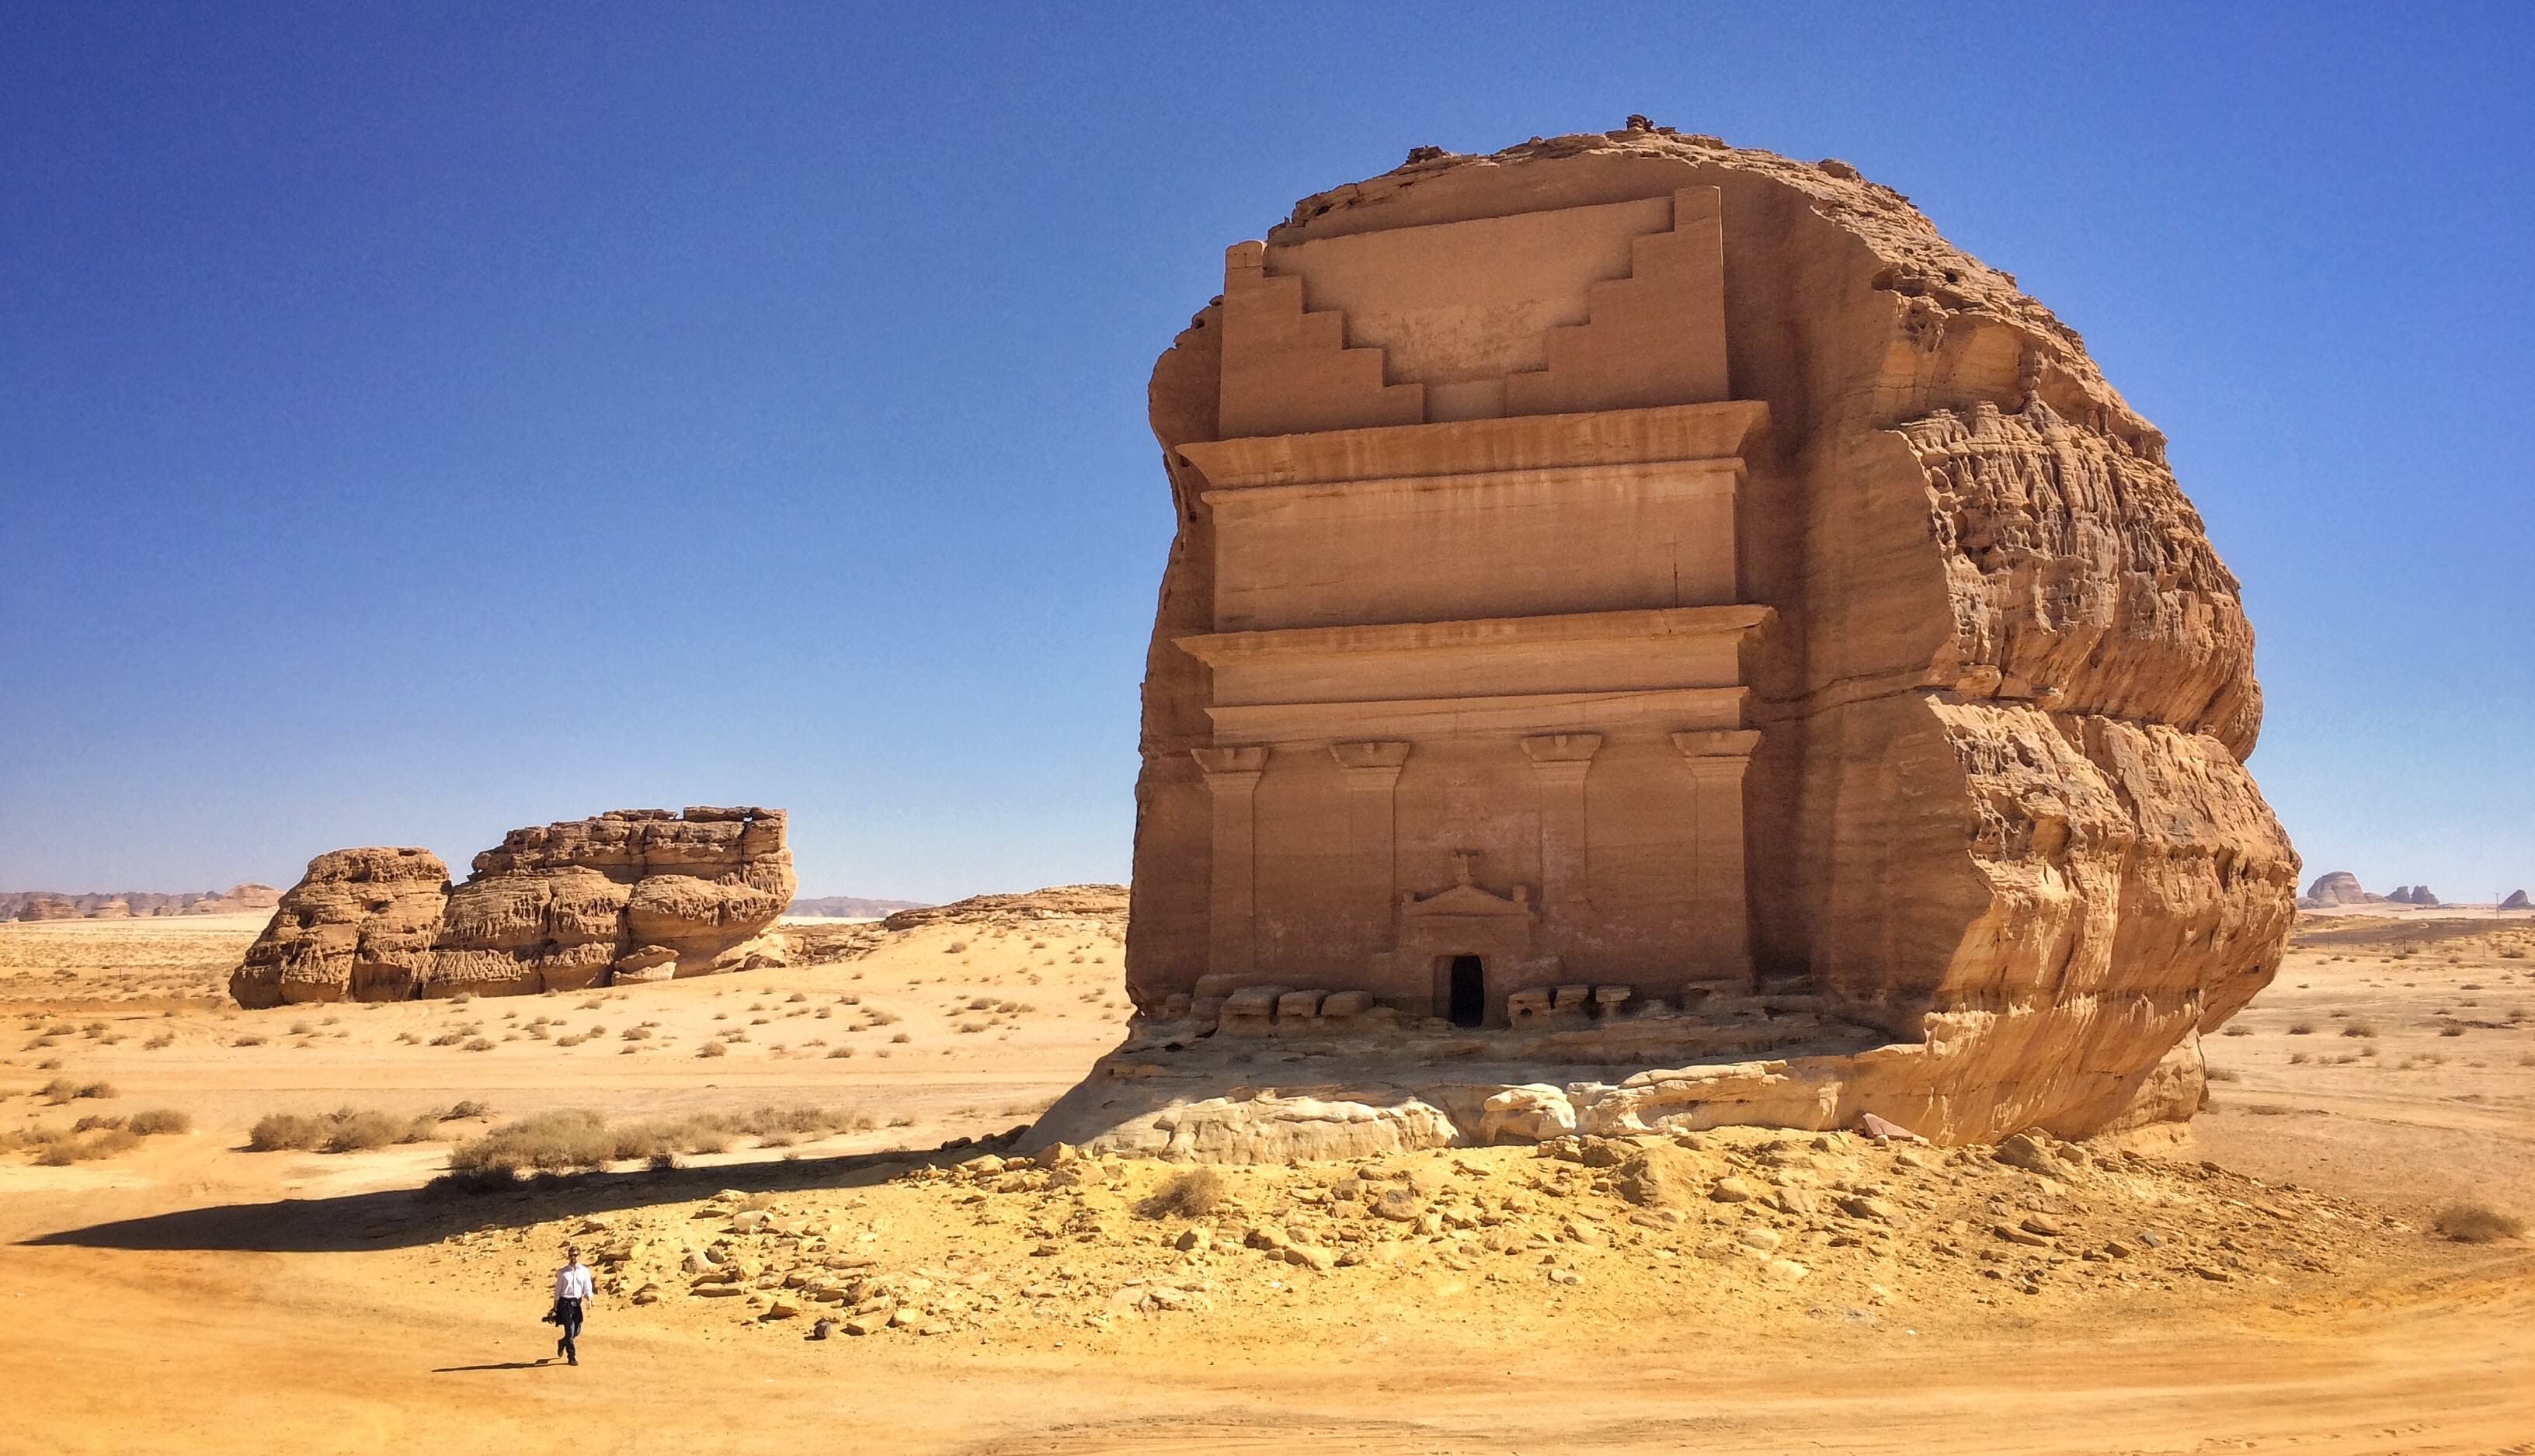 Unfinished tomb Qasr al-Farid "Lonely Castle" in Mada'in Saleh, Saudia Arabia